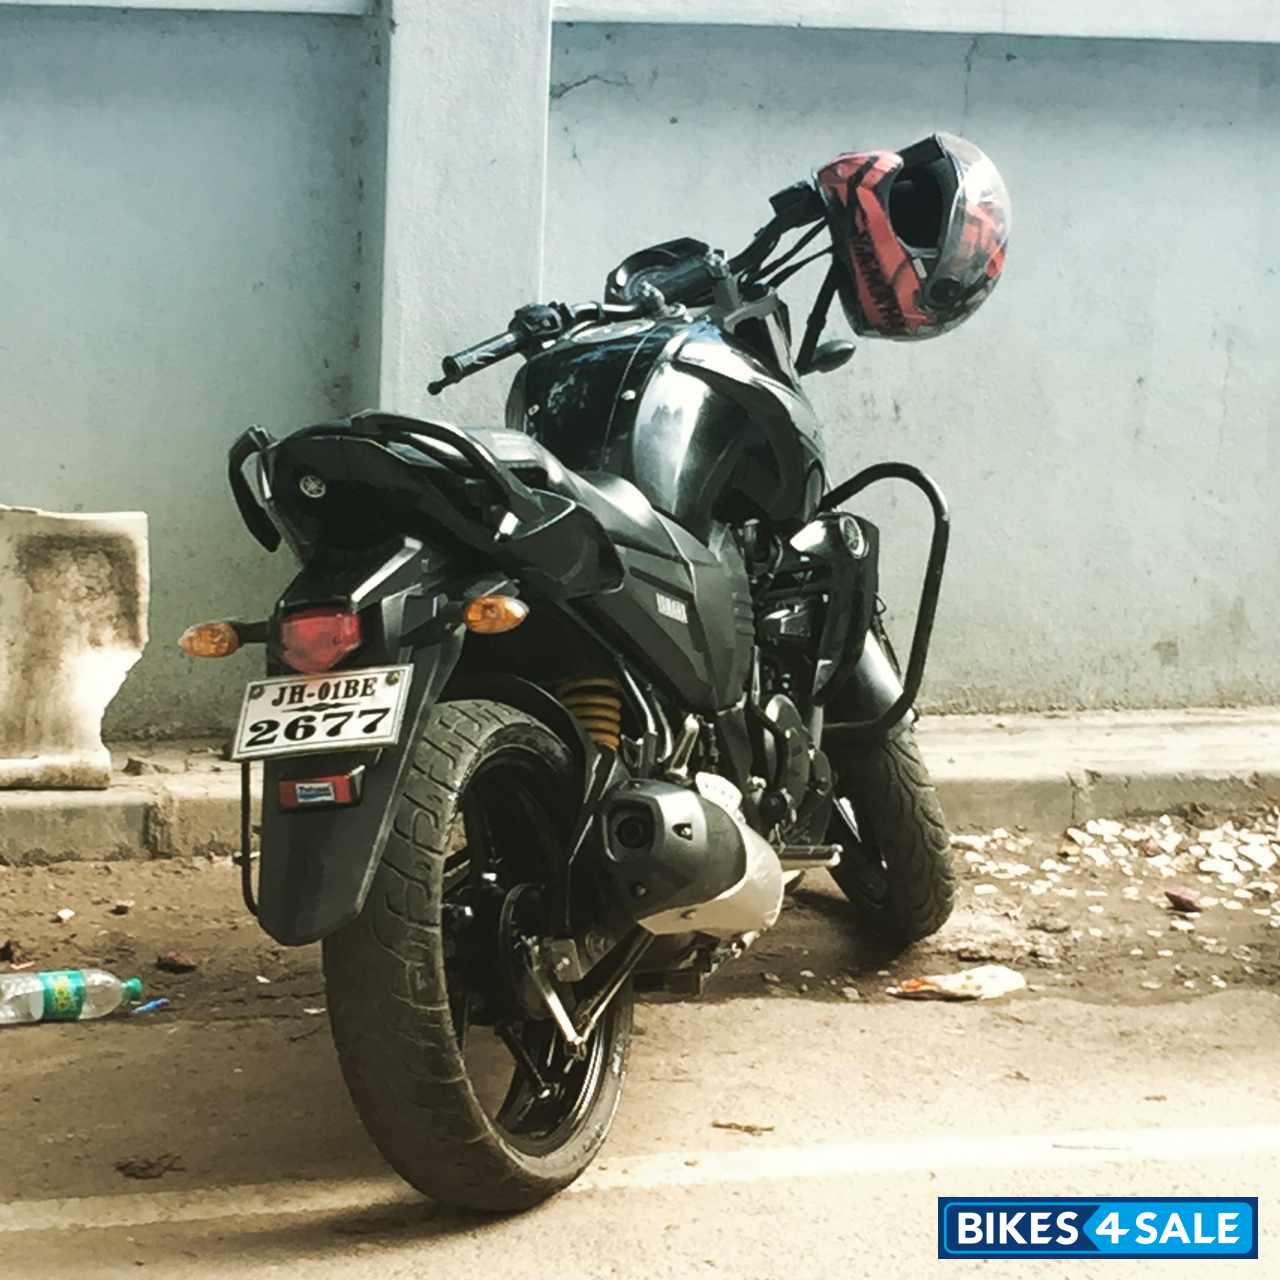 Used 2014 model Yamaha FZ16 for sale in Bangalore. ID 233373 - Bikes4Sale